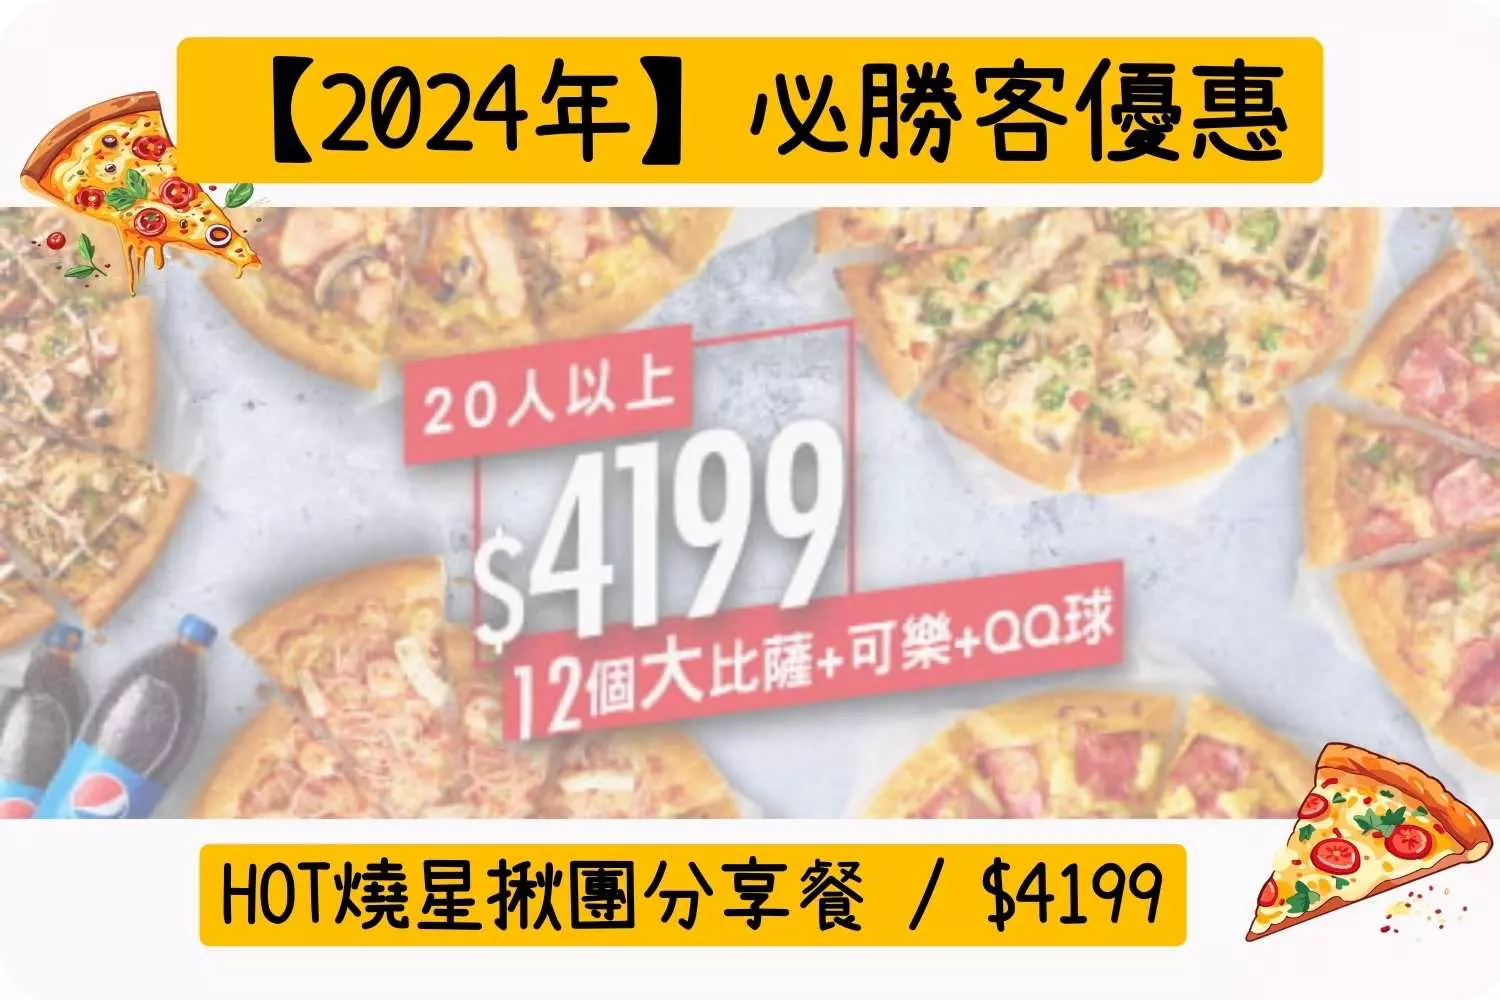 HOT燒星揪團分享餐 / $4199